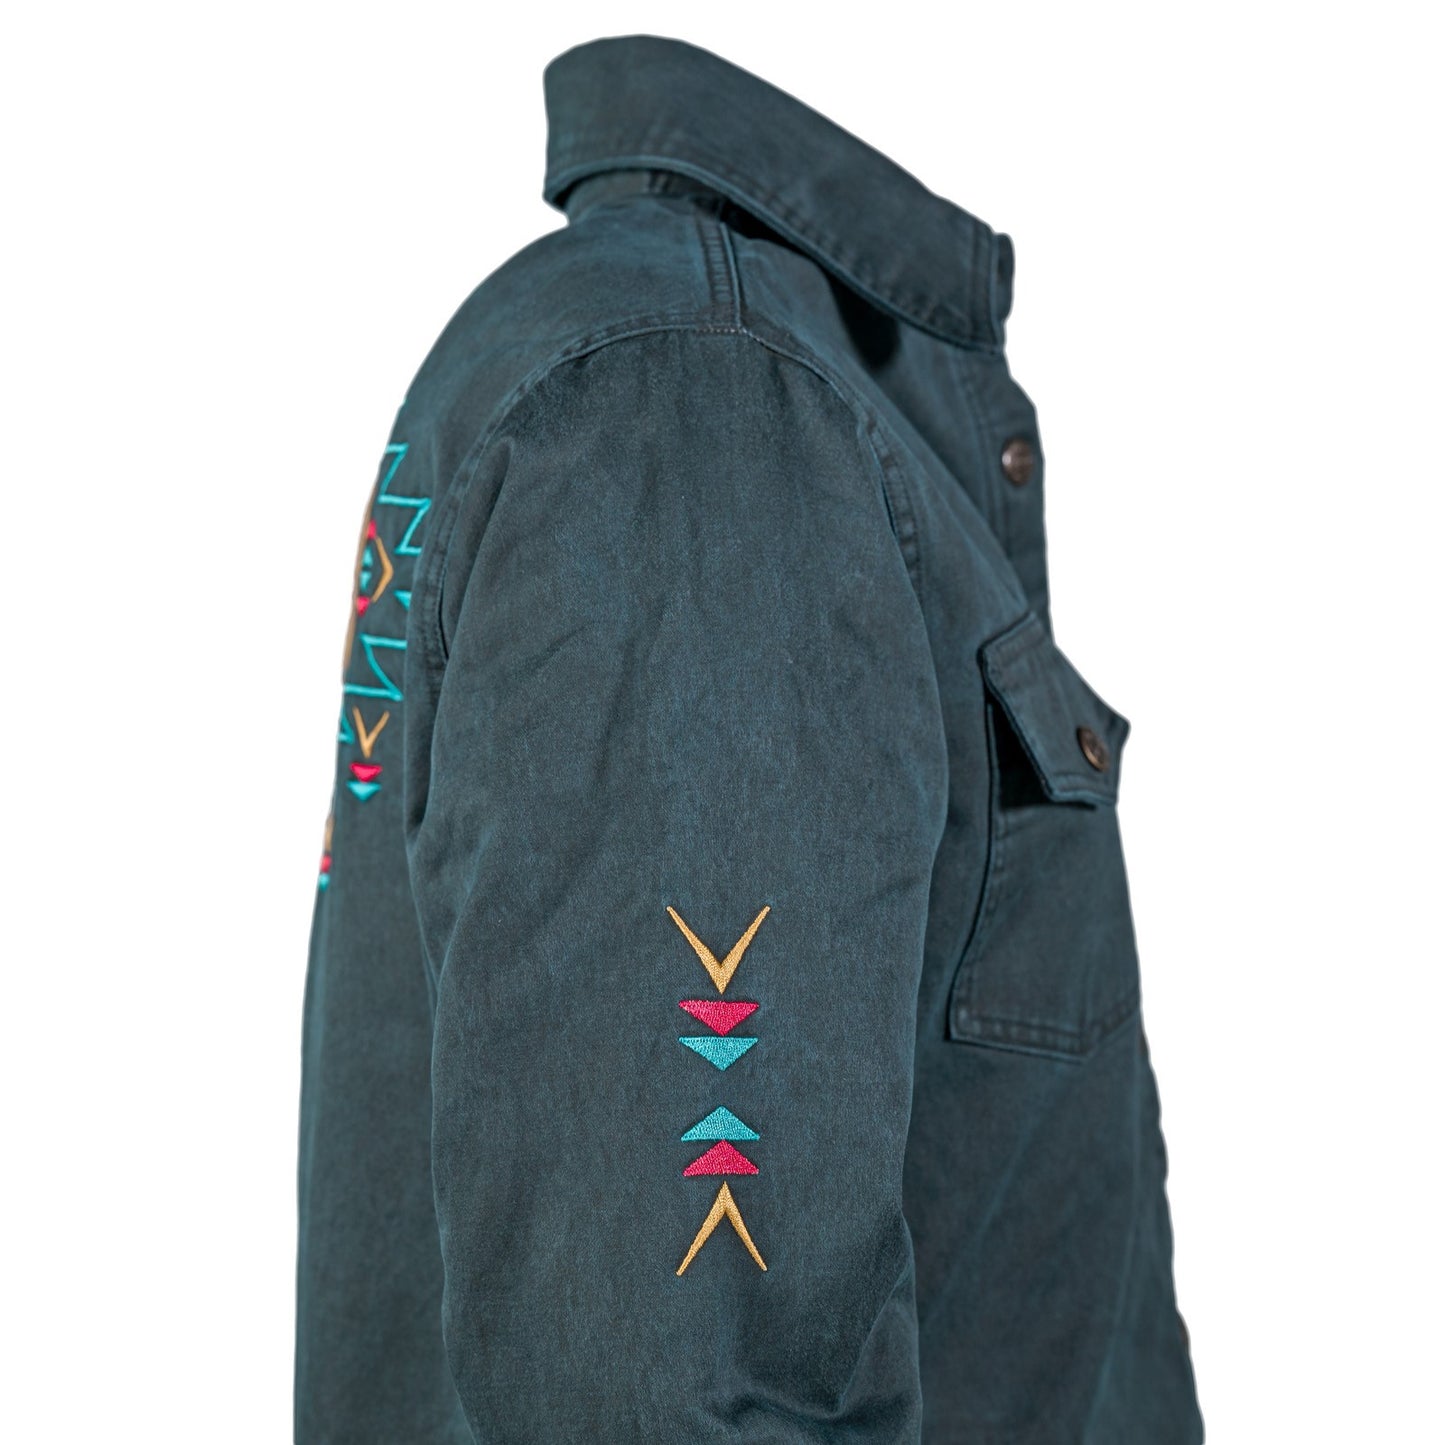 Outback Trading Ladies Ash Navy Snap Shirt Jacket 29676-NVY